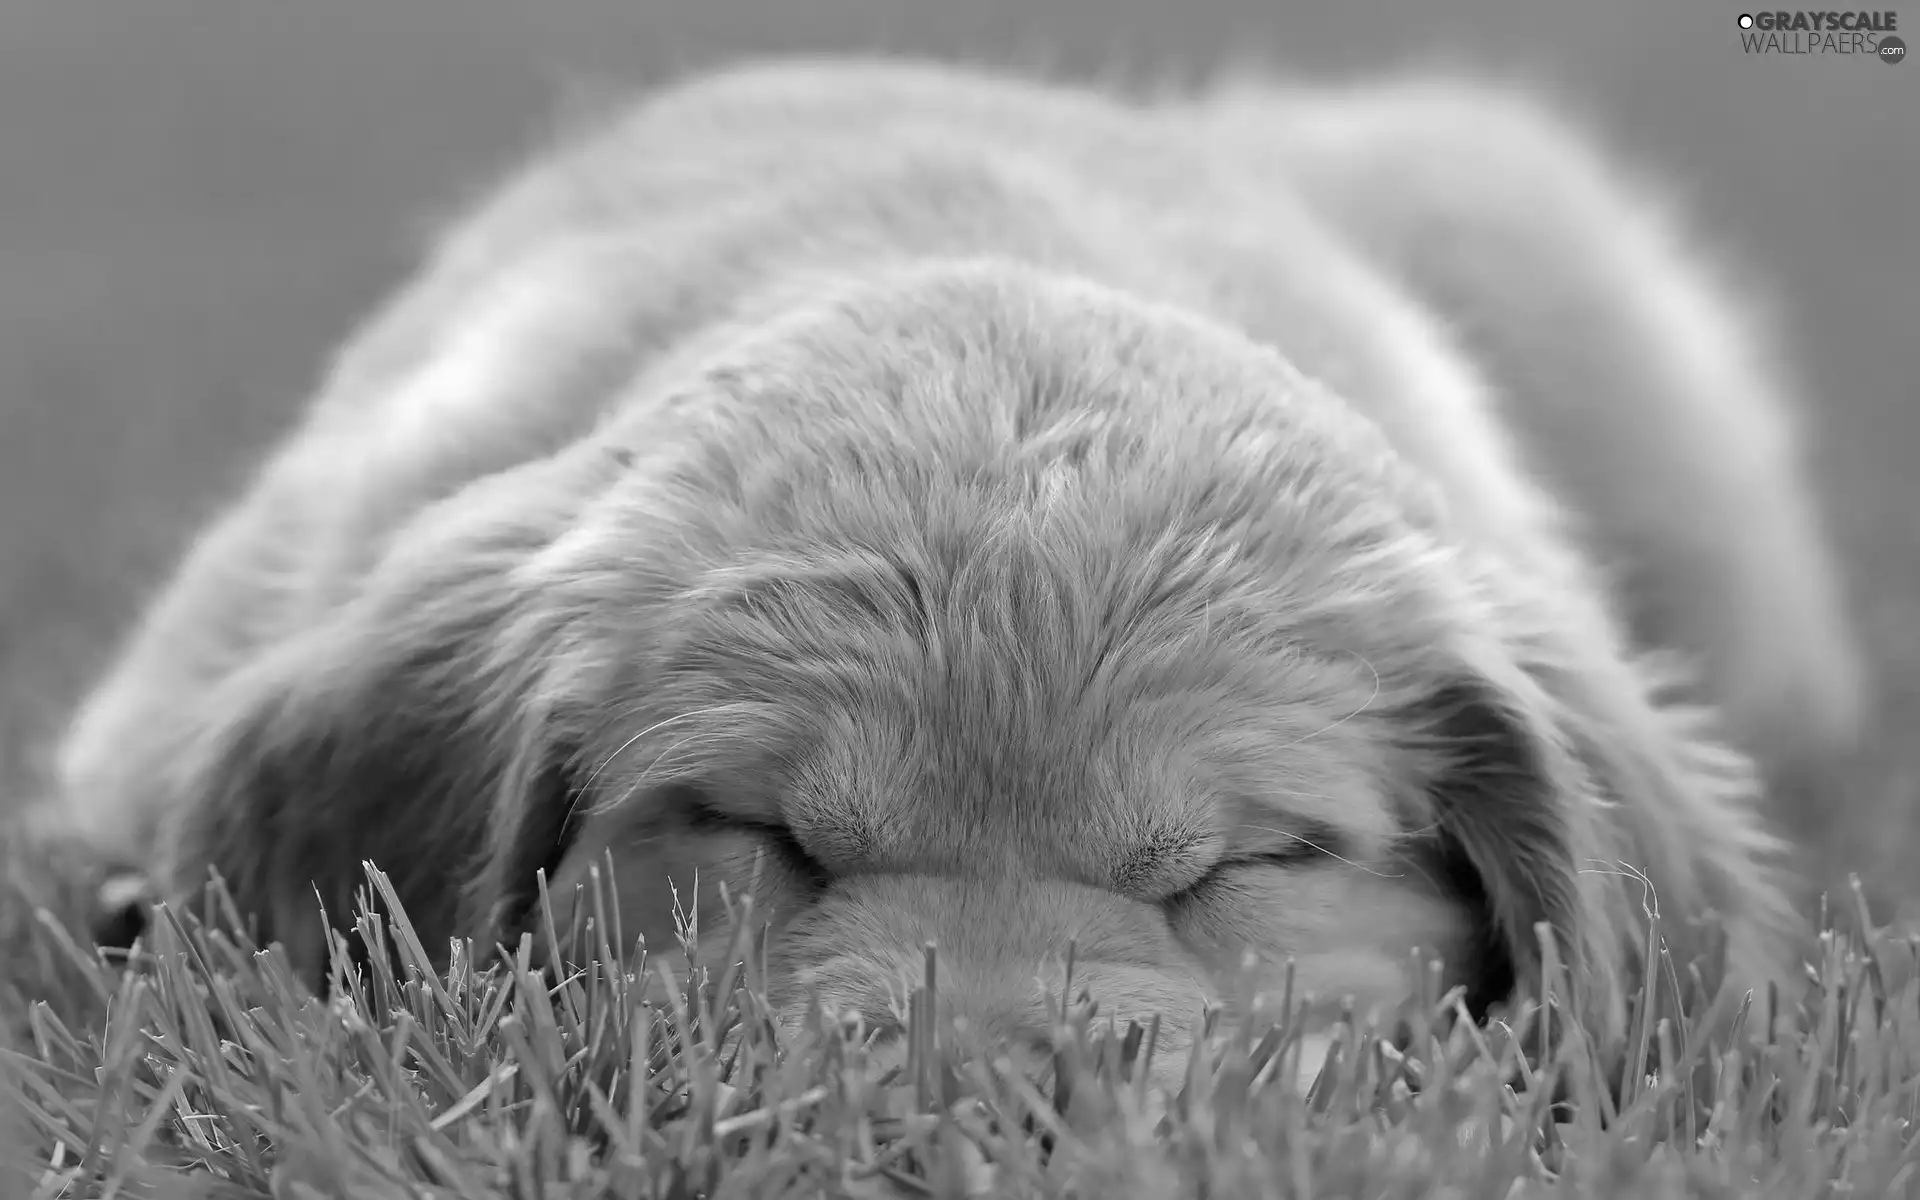 grass, sleepy, puppie